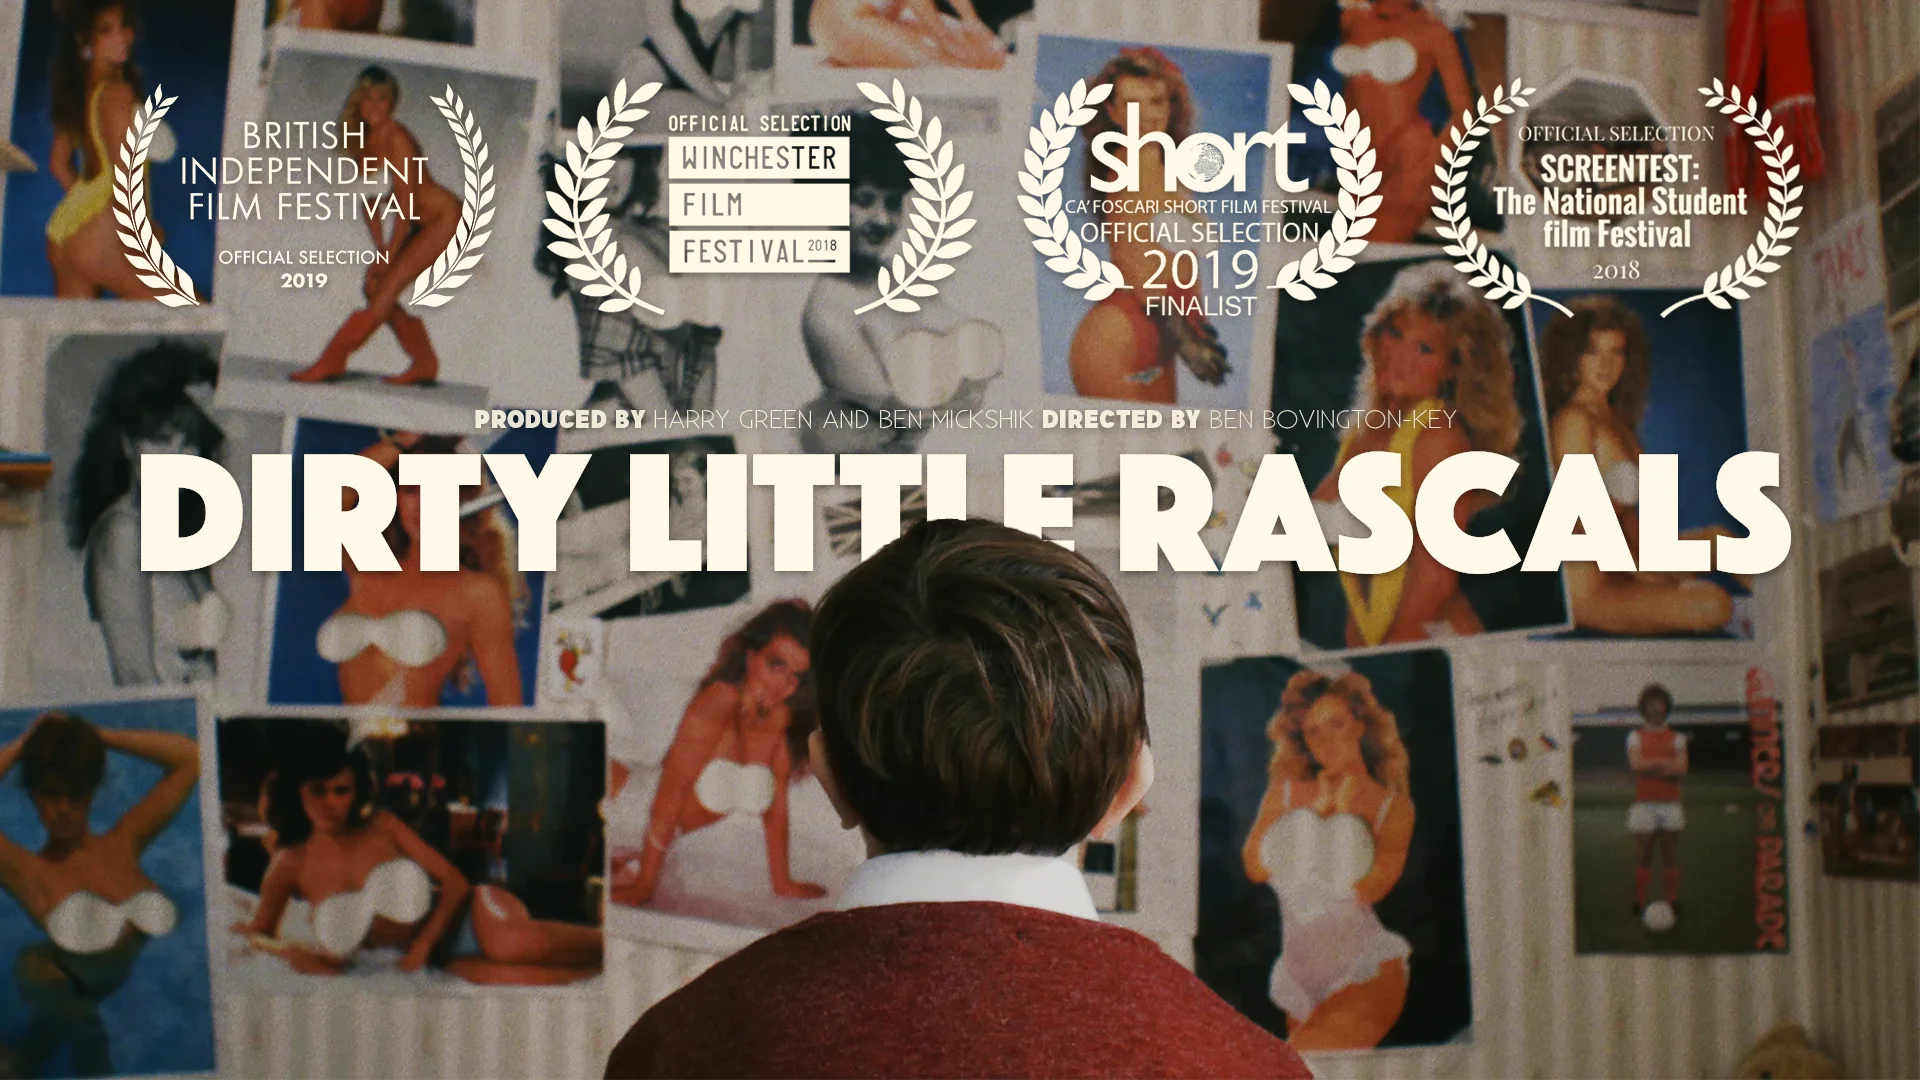 The Little Rascals (1994)  Bullies Chase Alfalfa 